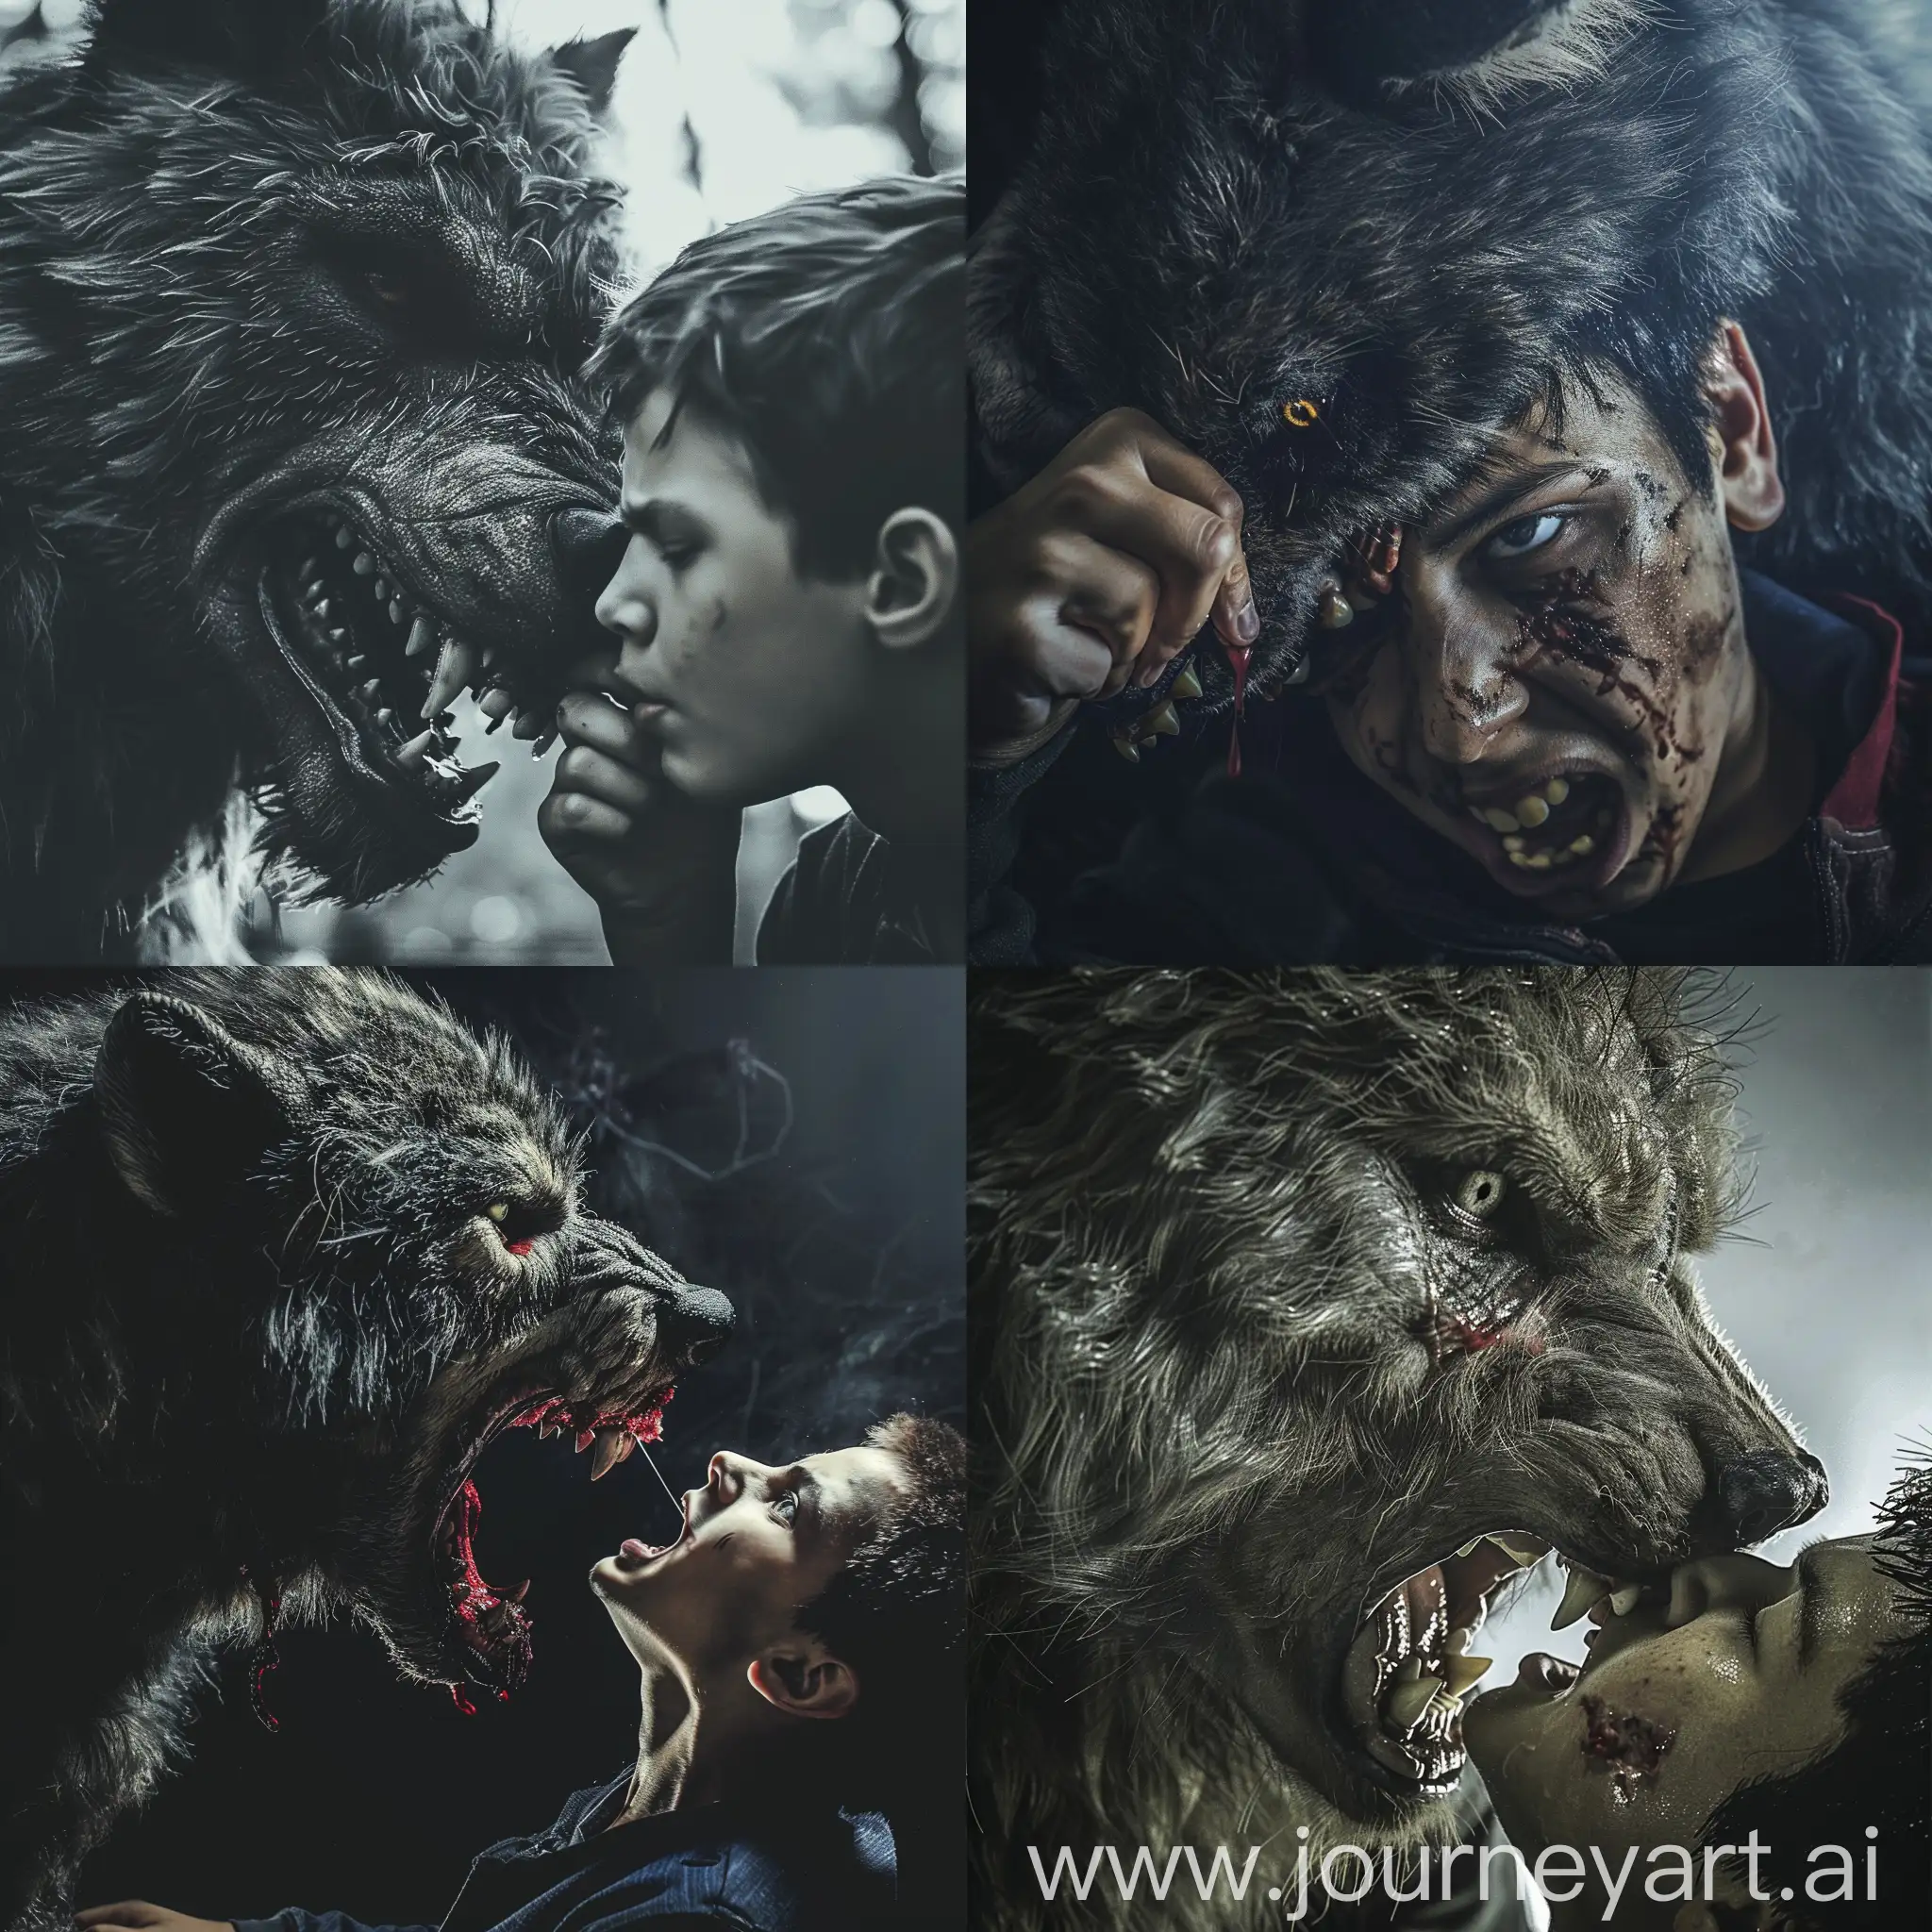 Create a hyper realistic image of a werewolf bites a teenager boy